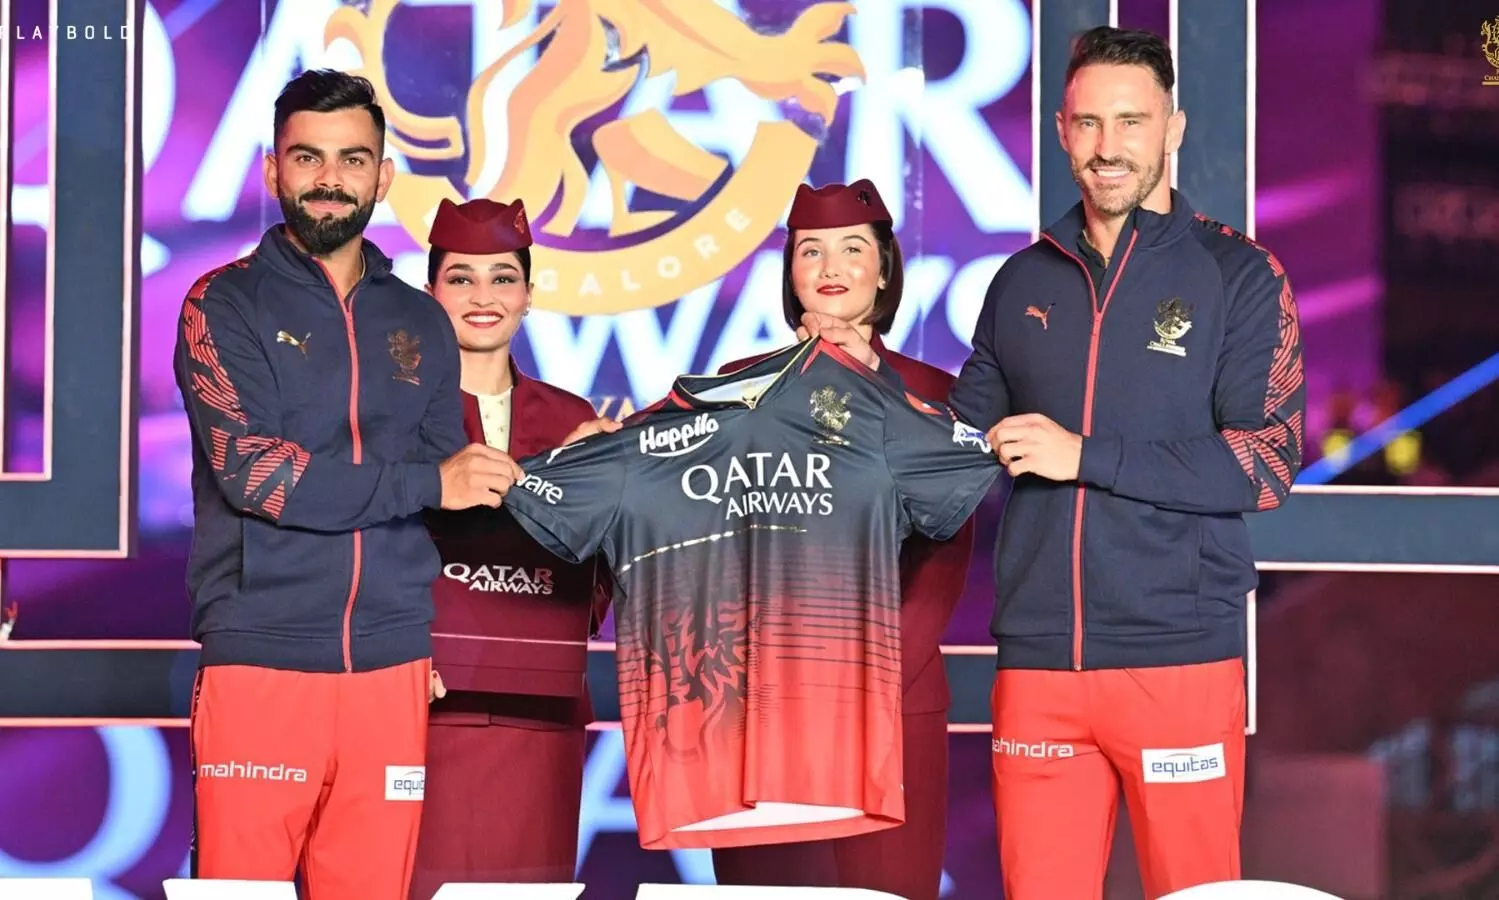 Qatar Airways sponsor Royal Challengers Bangalore